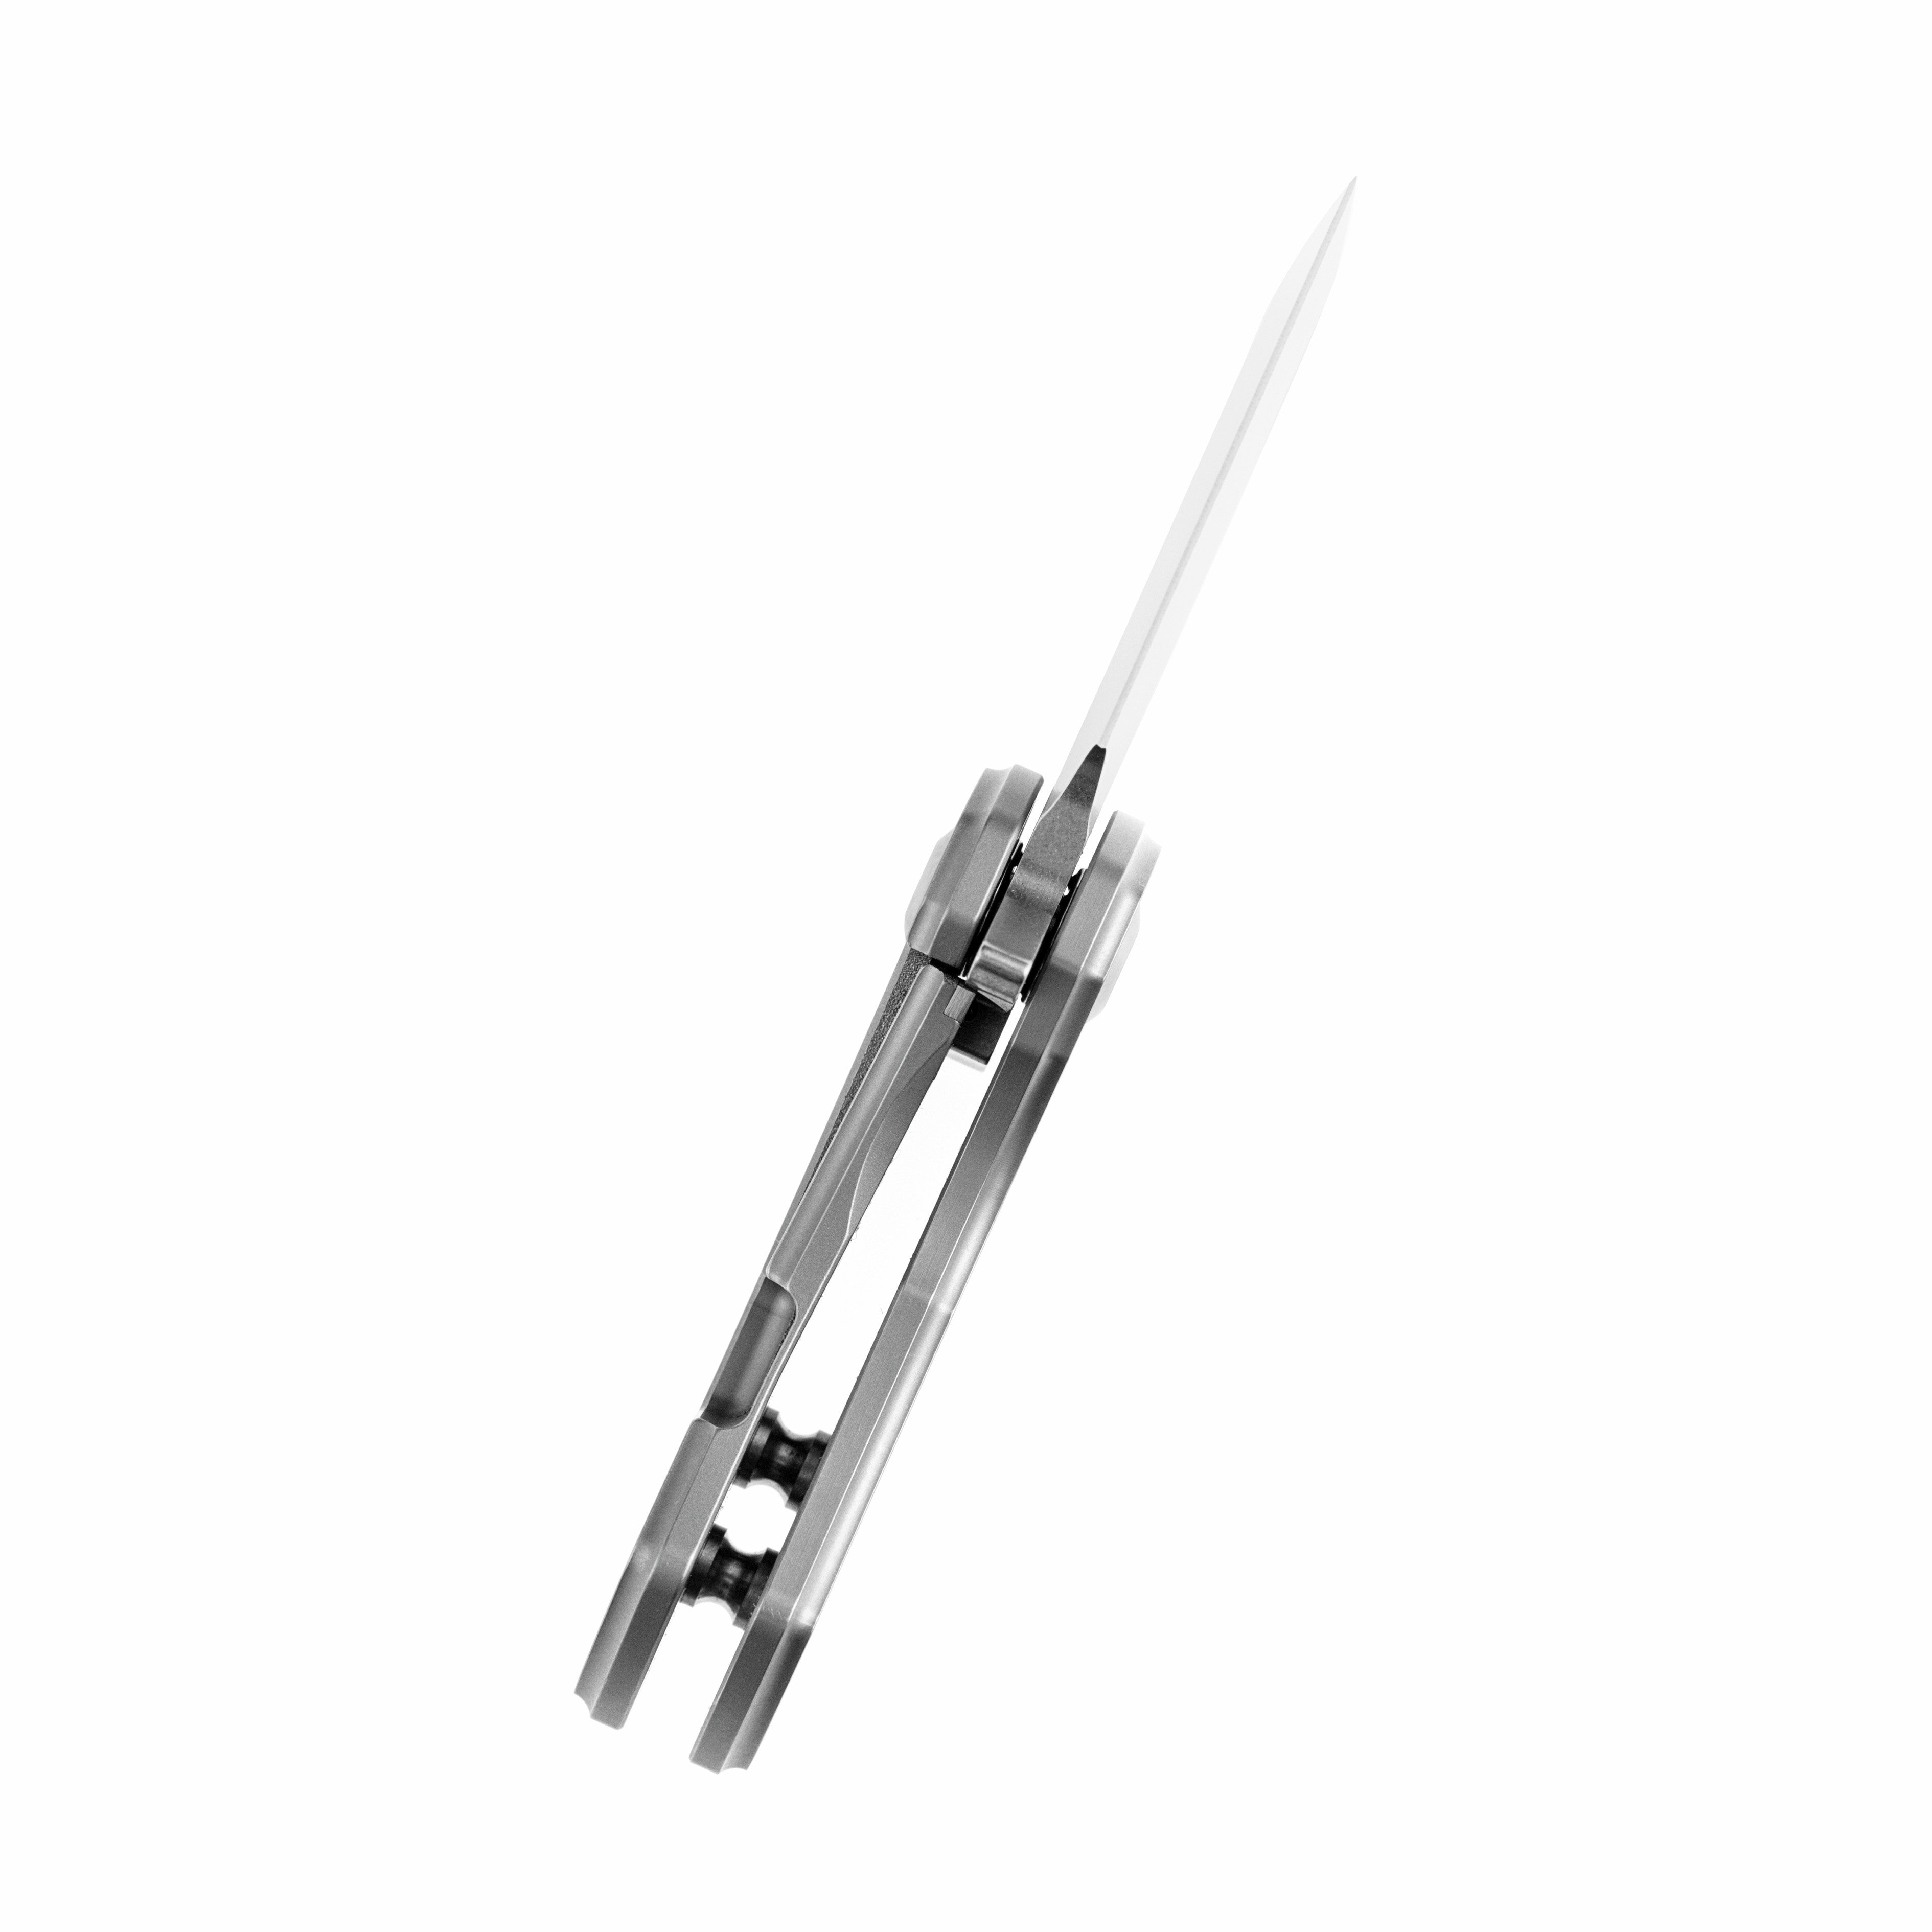 Kansept 刀具 Mini Korvid K3030A5 S35VN 刀片渐变钛手柄框架锁